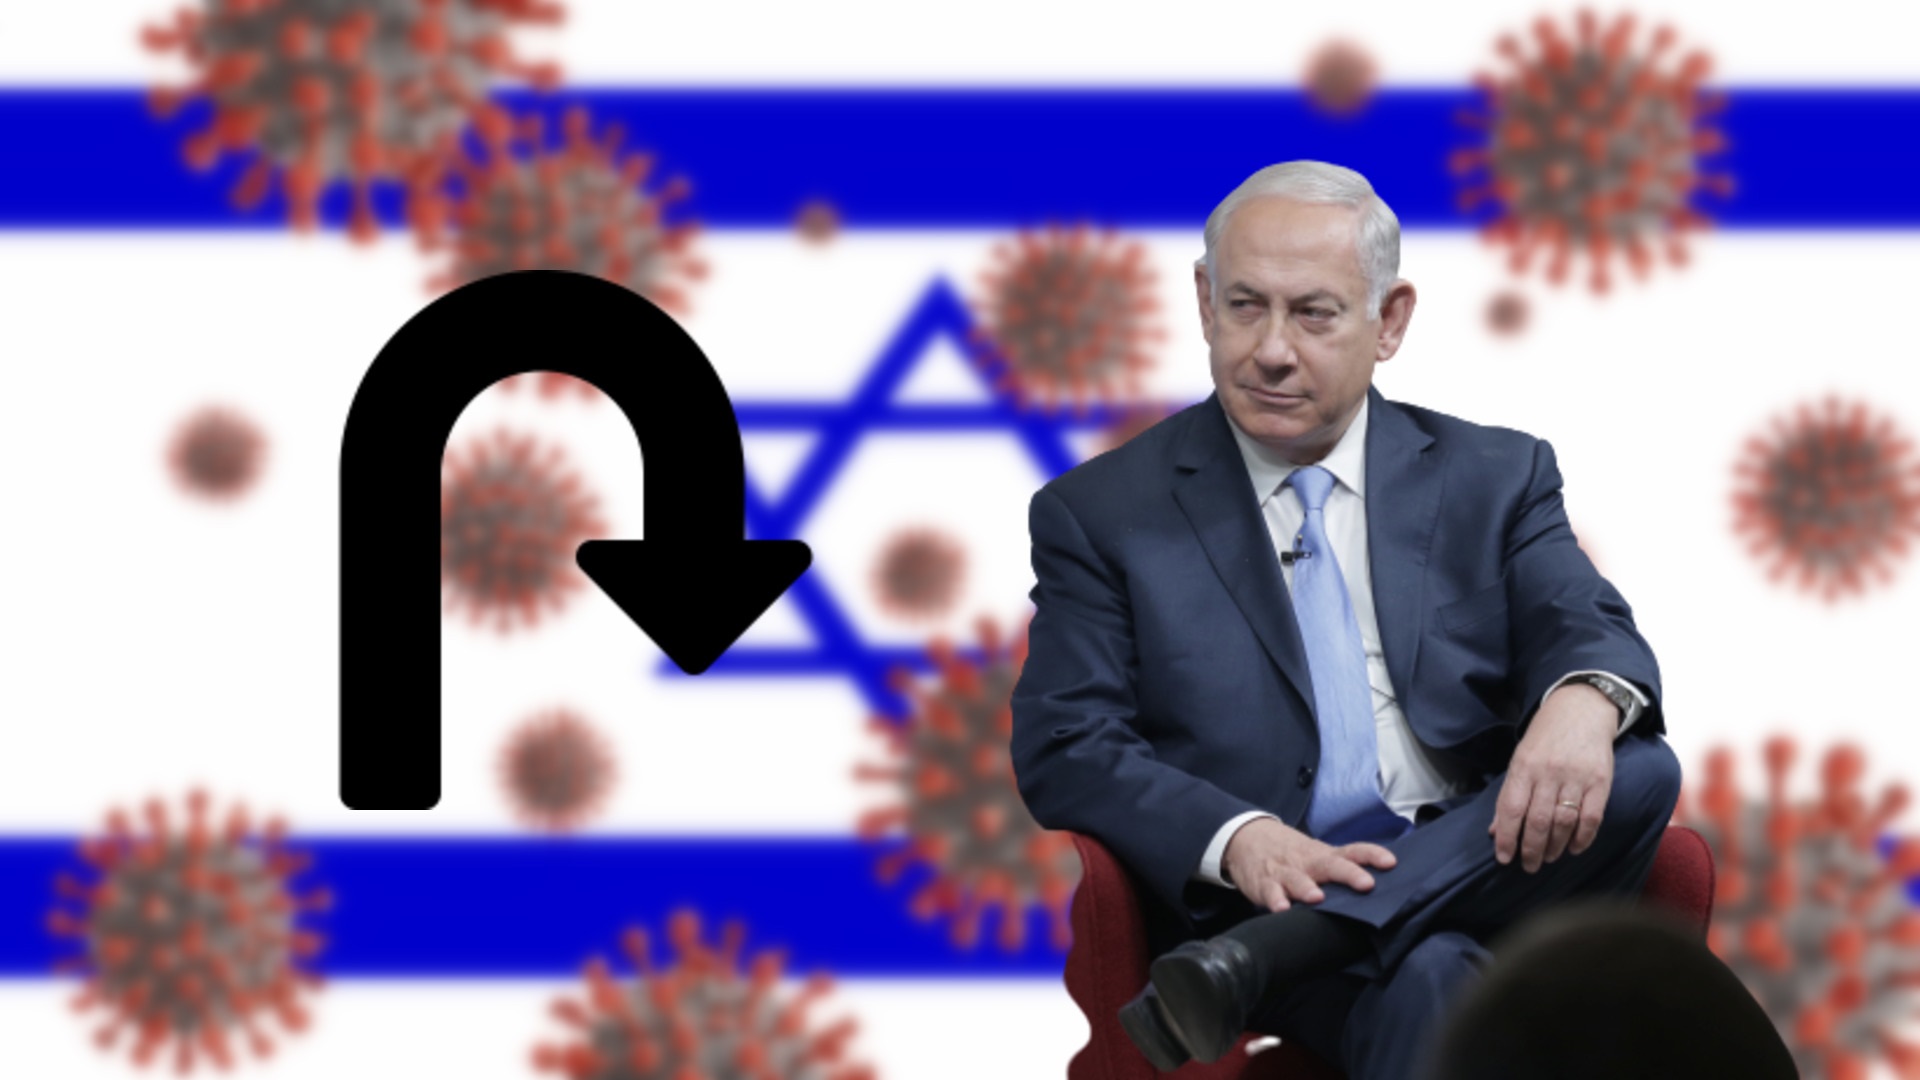 Netanyahu Pulls a Fast One on His Own Health Advisers